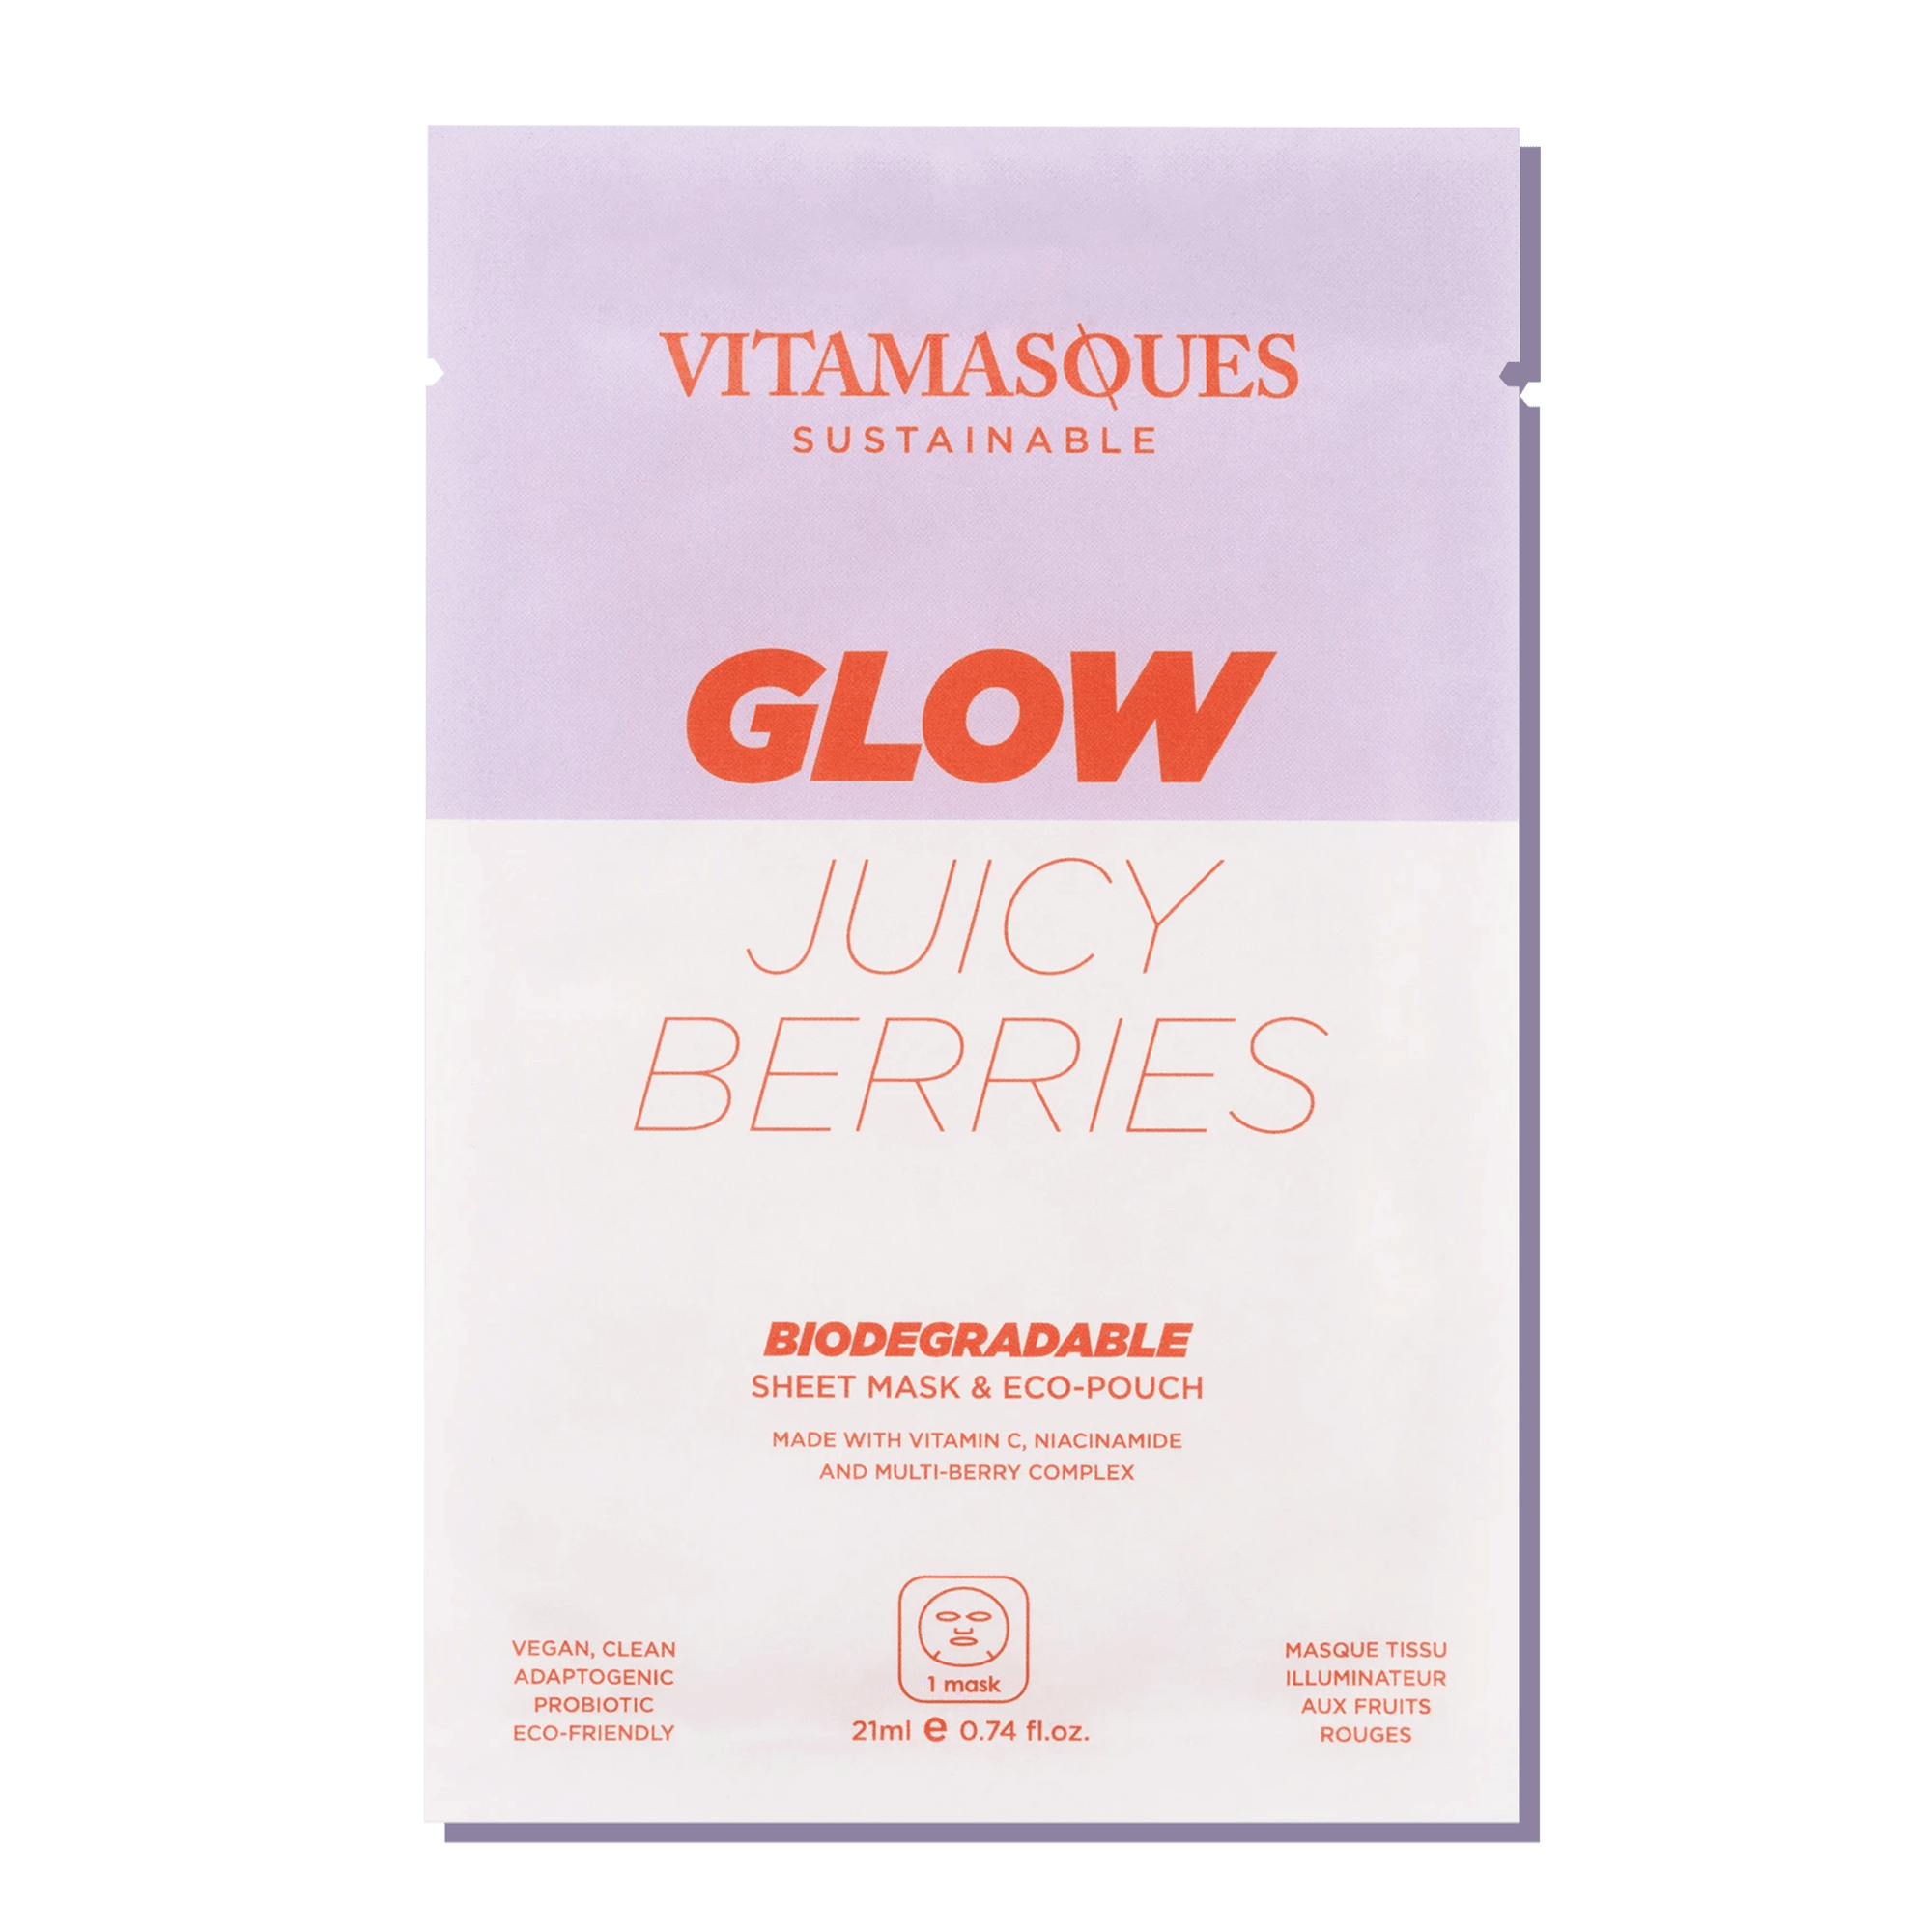 Glow Juicy Berries Biodegradable Mask - Vitamasques